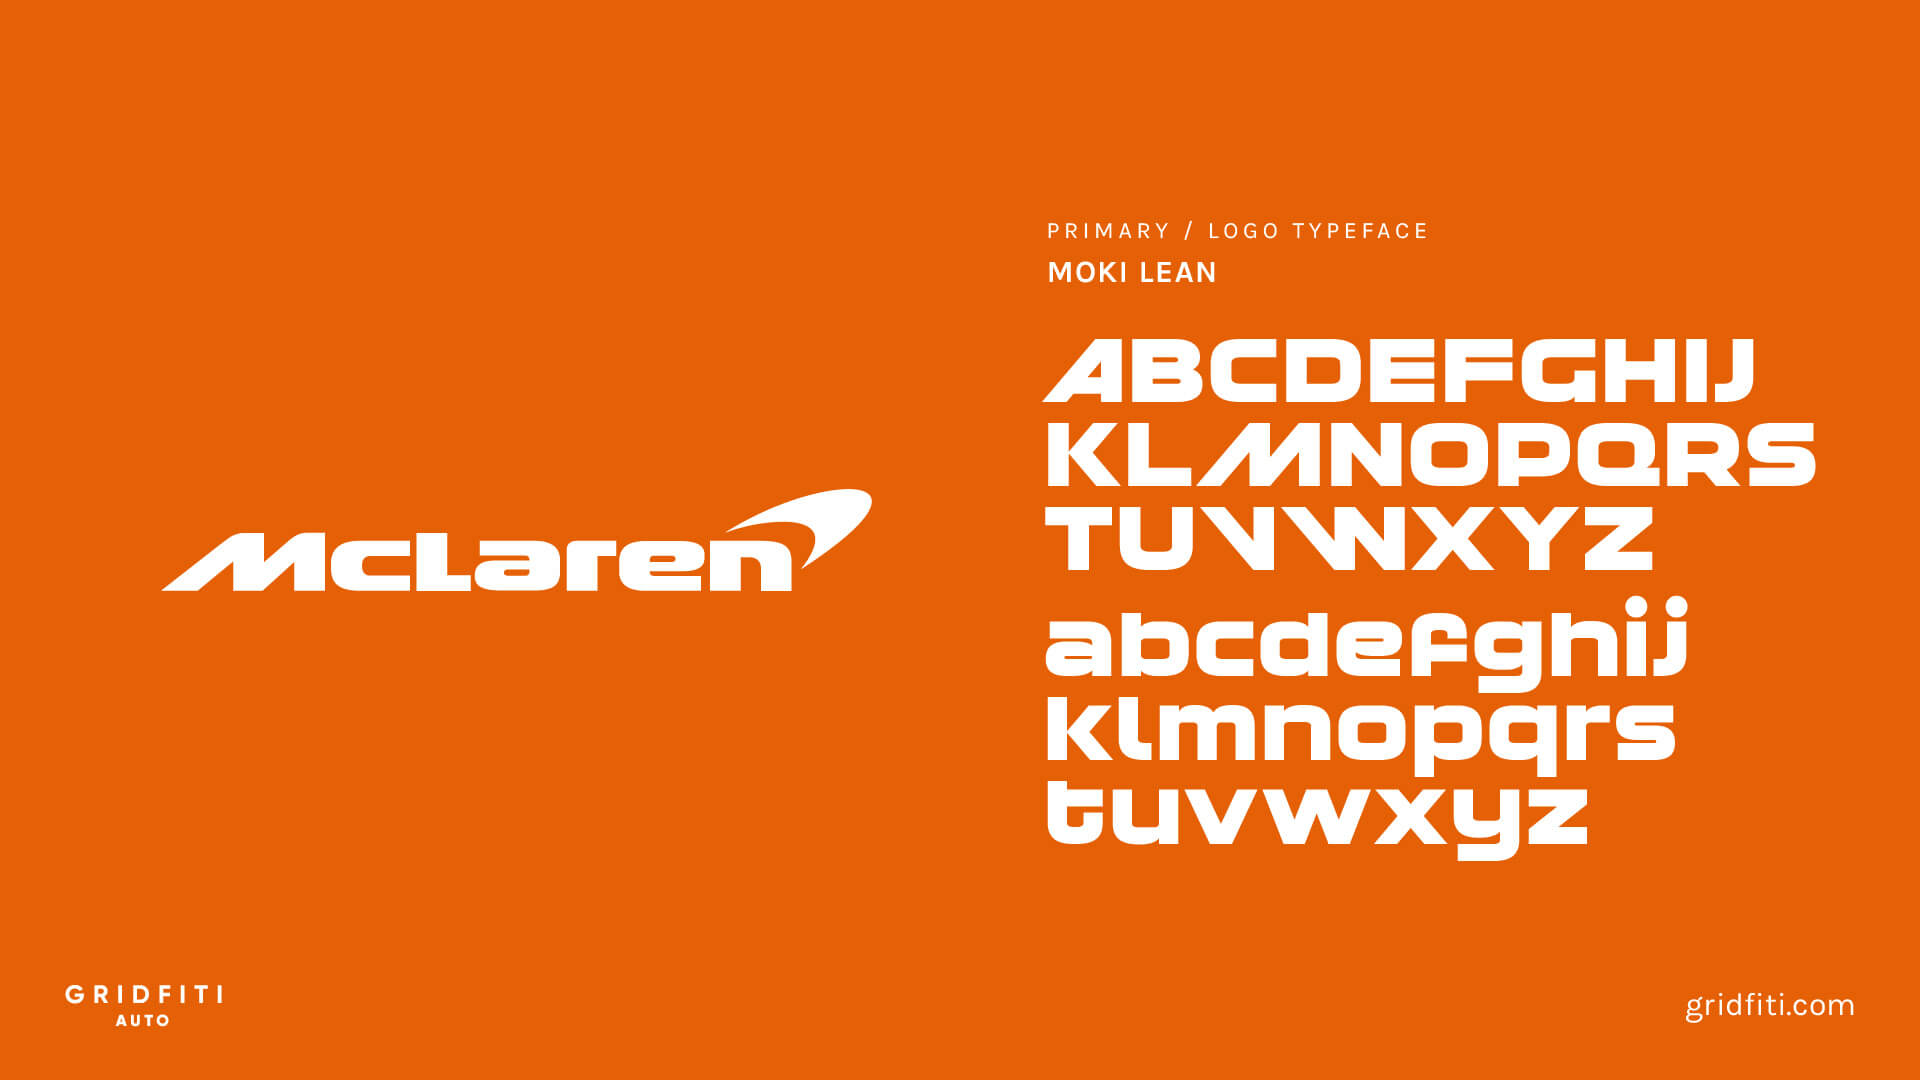 McLaren Font